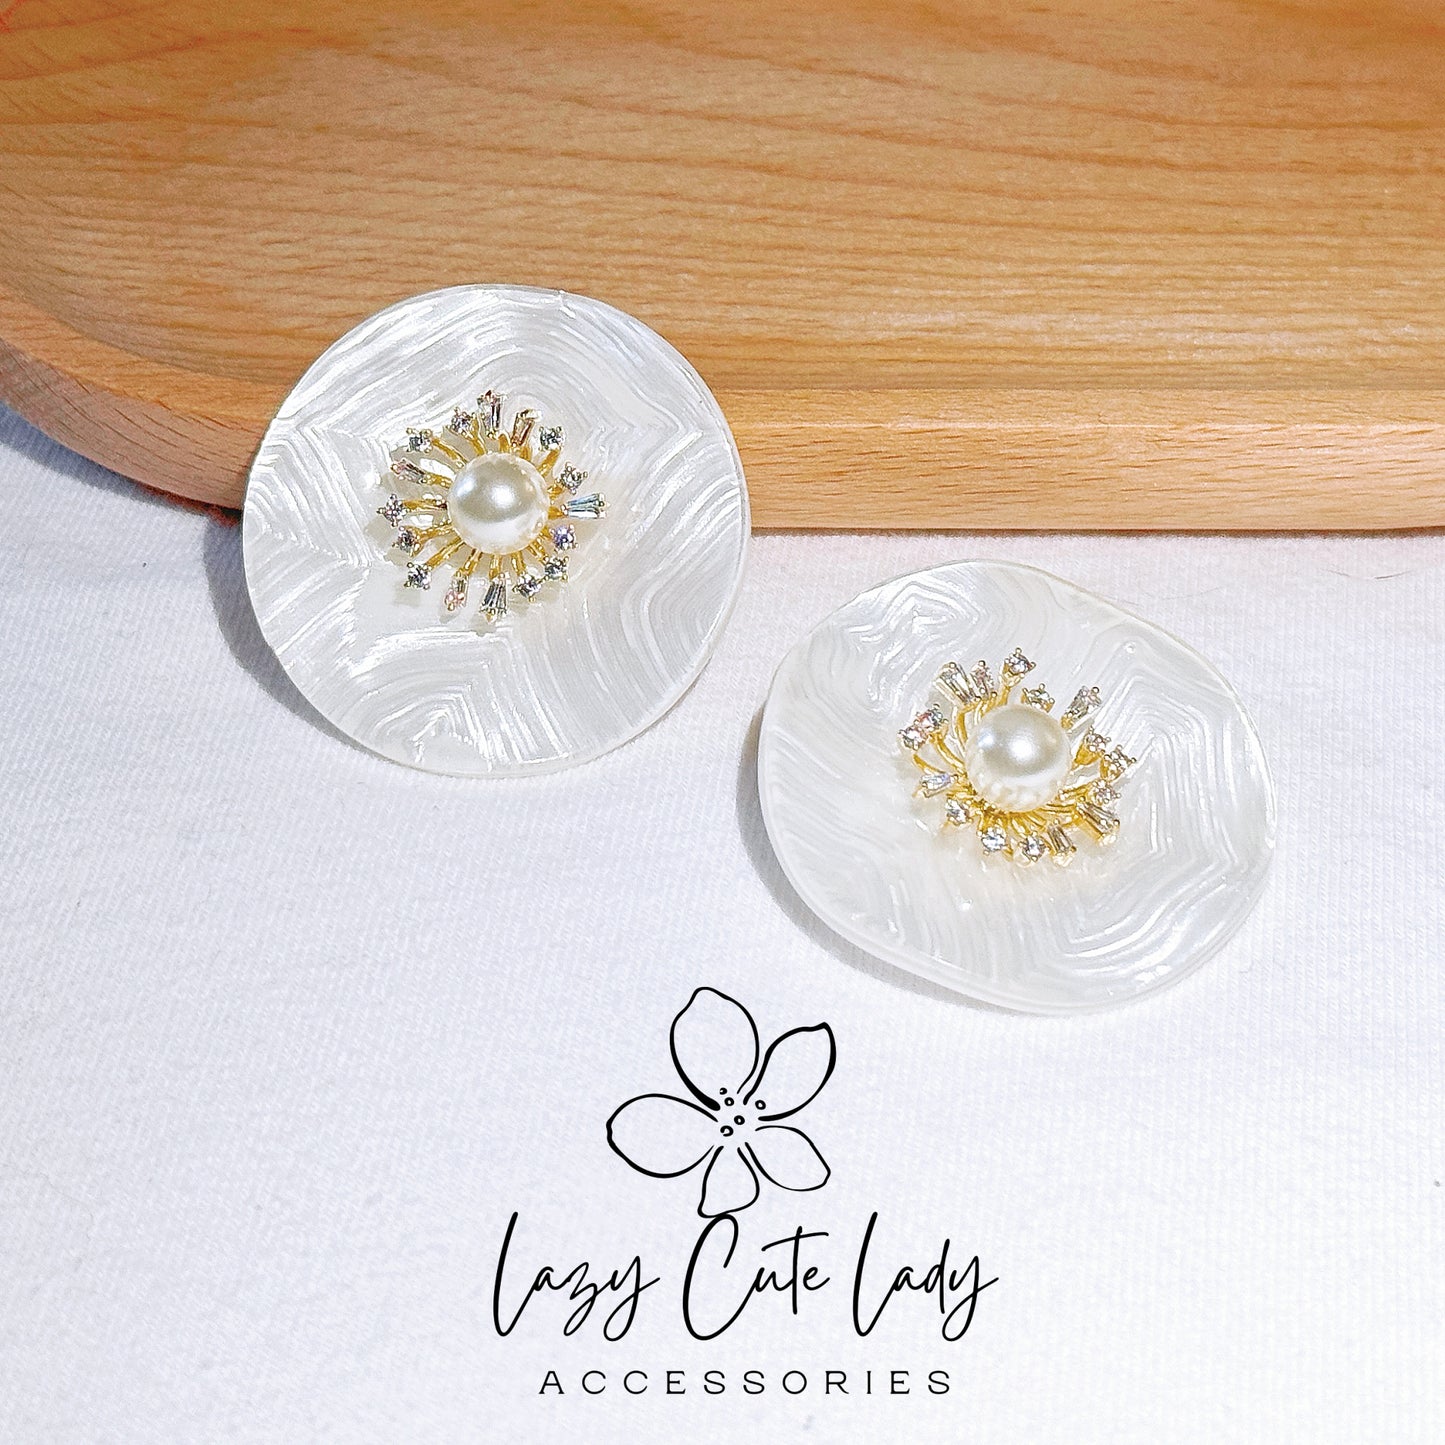 Elegant Seashell: White Shell Flower Earrings with Rhinestone Accent